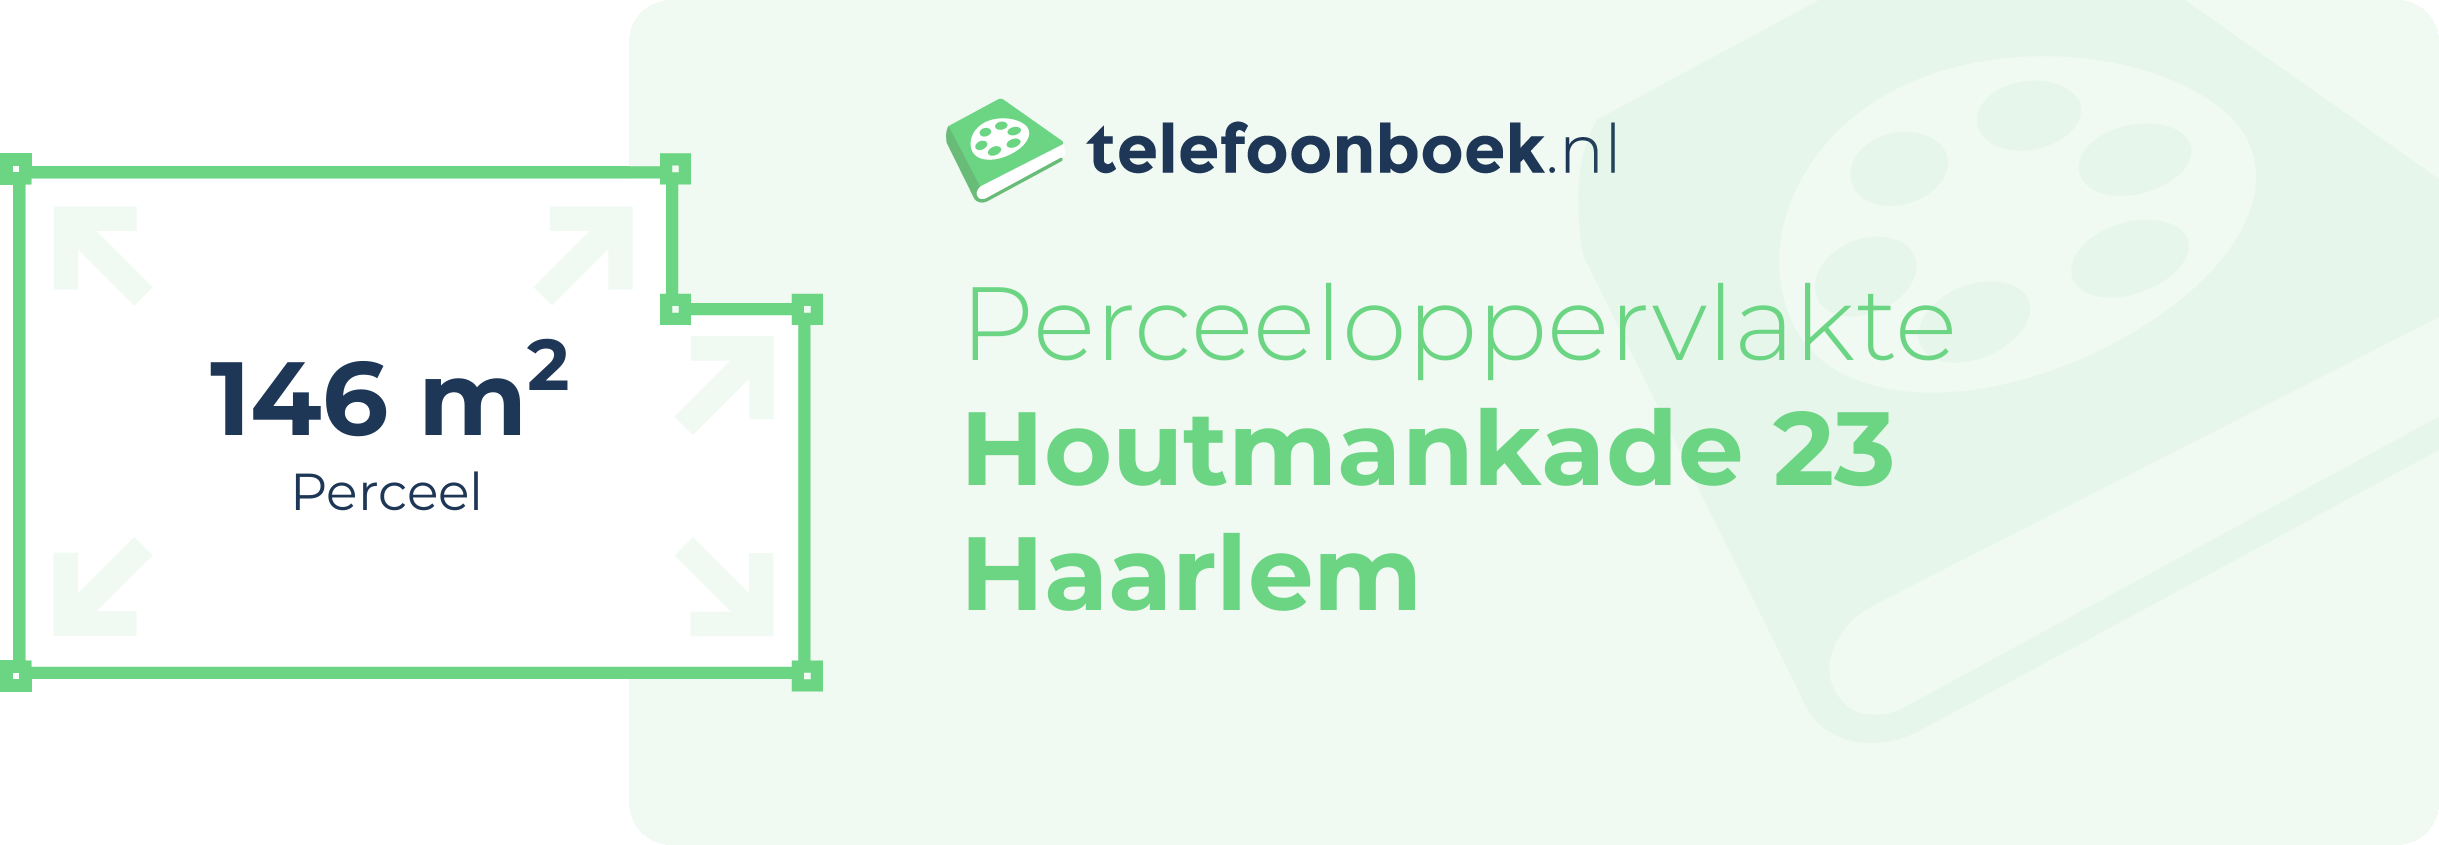 Perceeloppervlakte Houtmankade 23 Haarlem